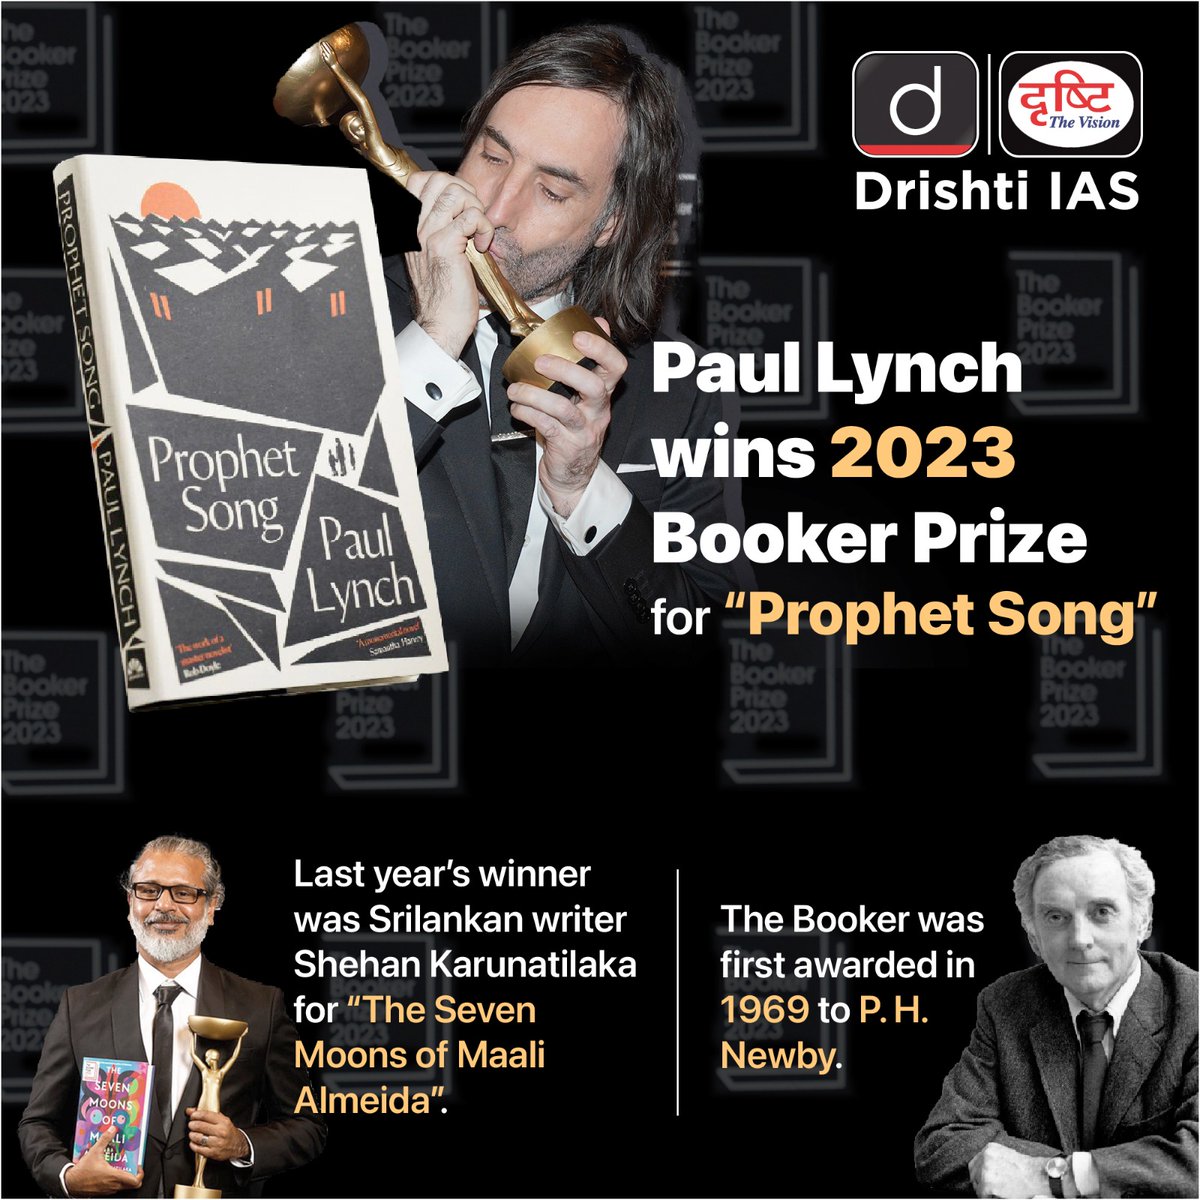 Ireland's Paul Lynch wins Booker Prize 2023 with 'Prophet Song’.

#BookerPrize #ProphetSong #PaulLynch #BookerPrize2023 #Ireland #Winner #BookReview #BookWorld #Books #BookReviewer #BookAesthetic #Bookstagram #Literature #BookLover #Readers #Words #Writer #UPSC #DrishtiIAS